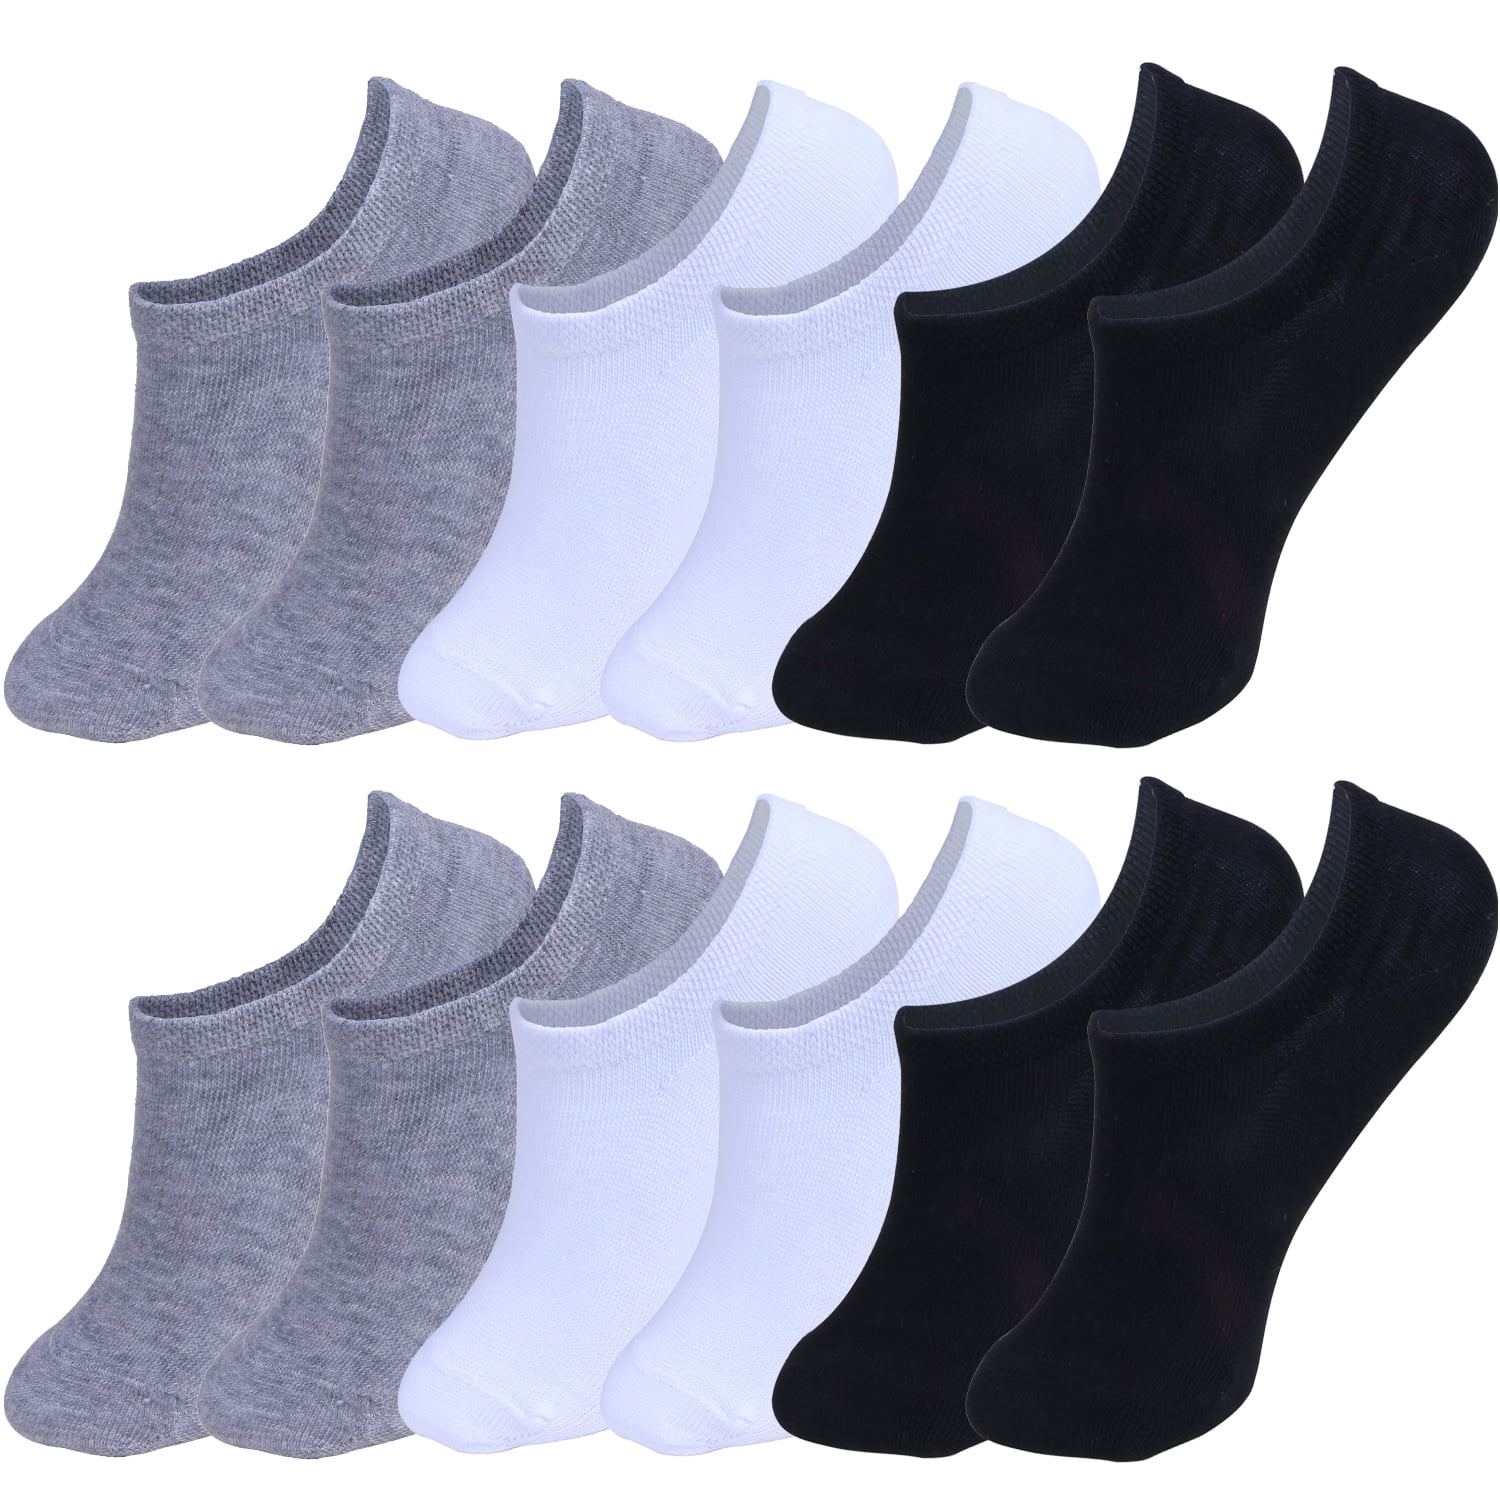 Lot 12 Pairs Men No Show Socks Gray/White/Black Mixed Liner Invisible ...